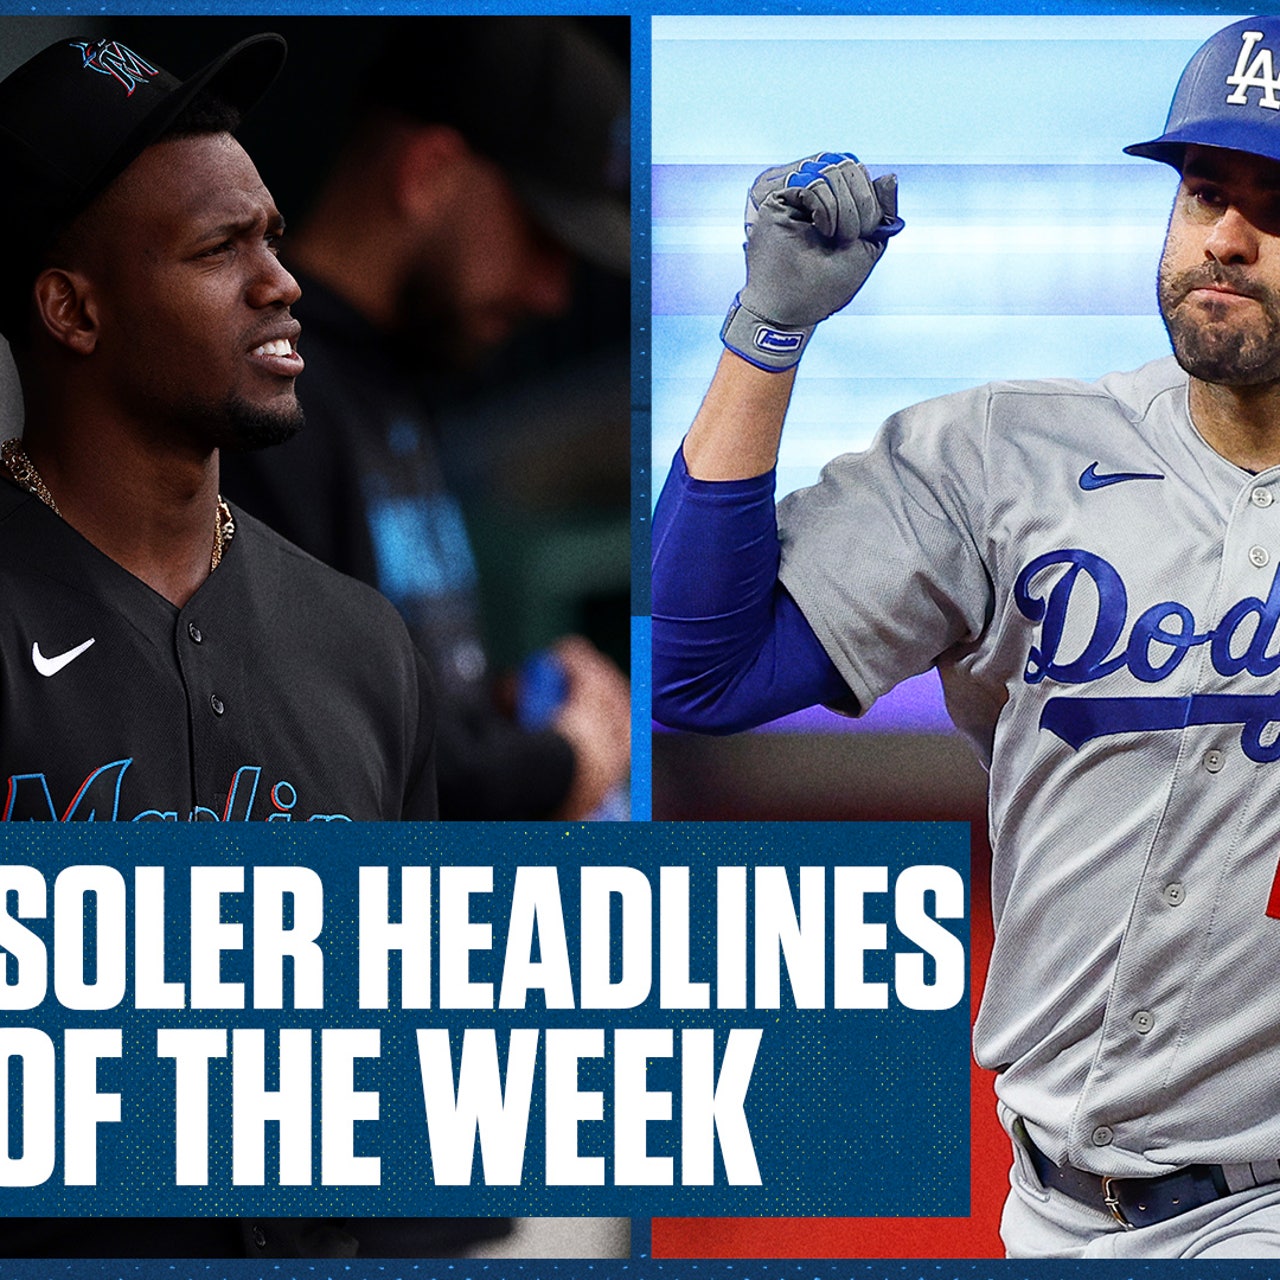 Dodgers' J.D. Martinez and Marlins Jorge Soler headline Ben's Team of the  Week, Flippin' Bats